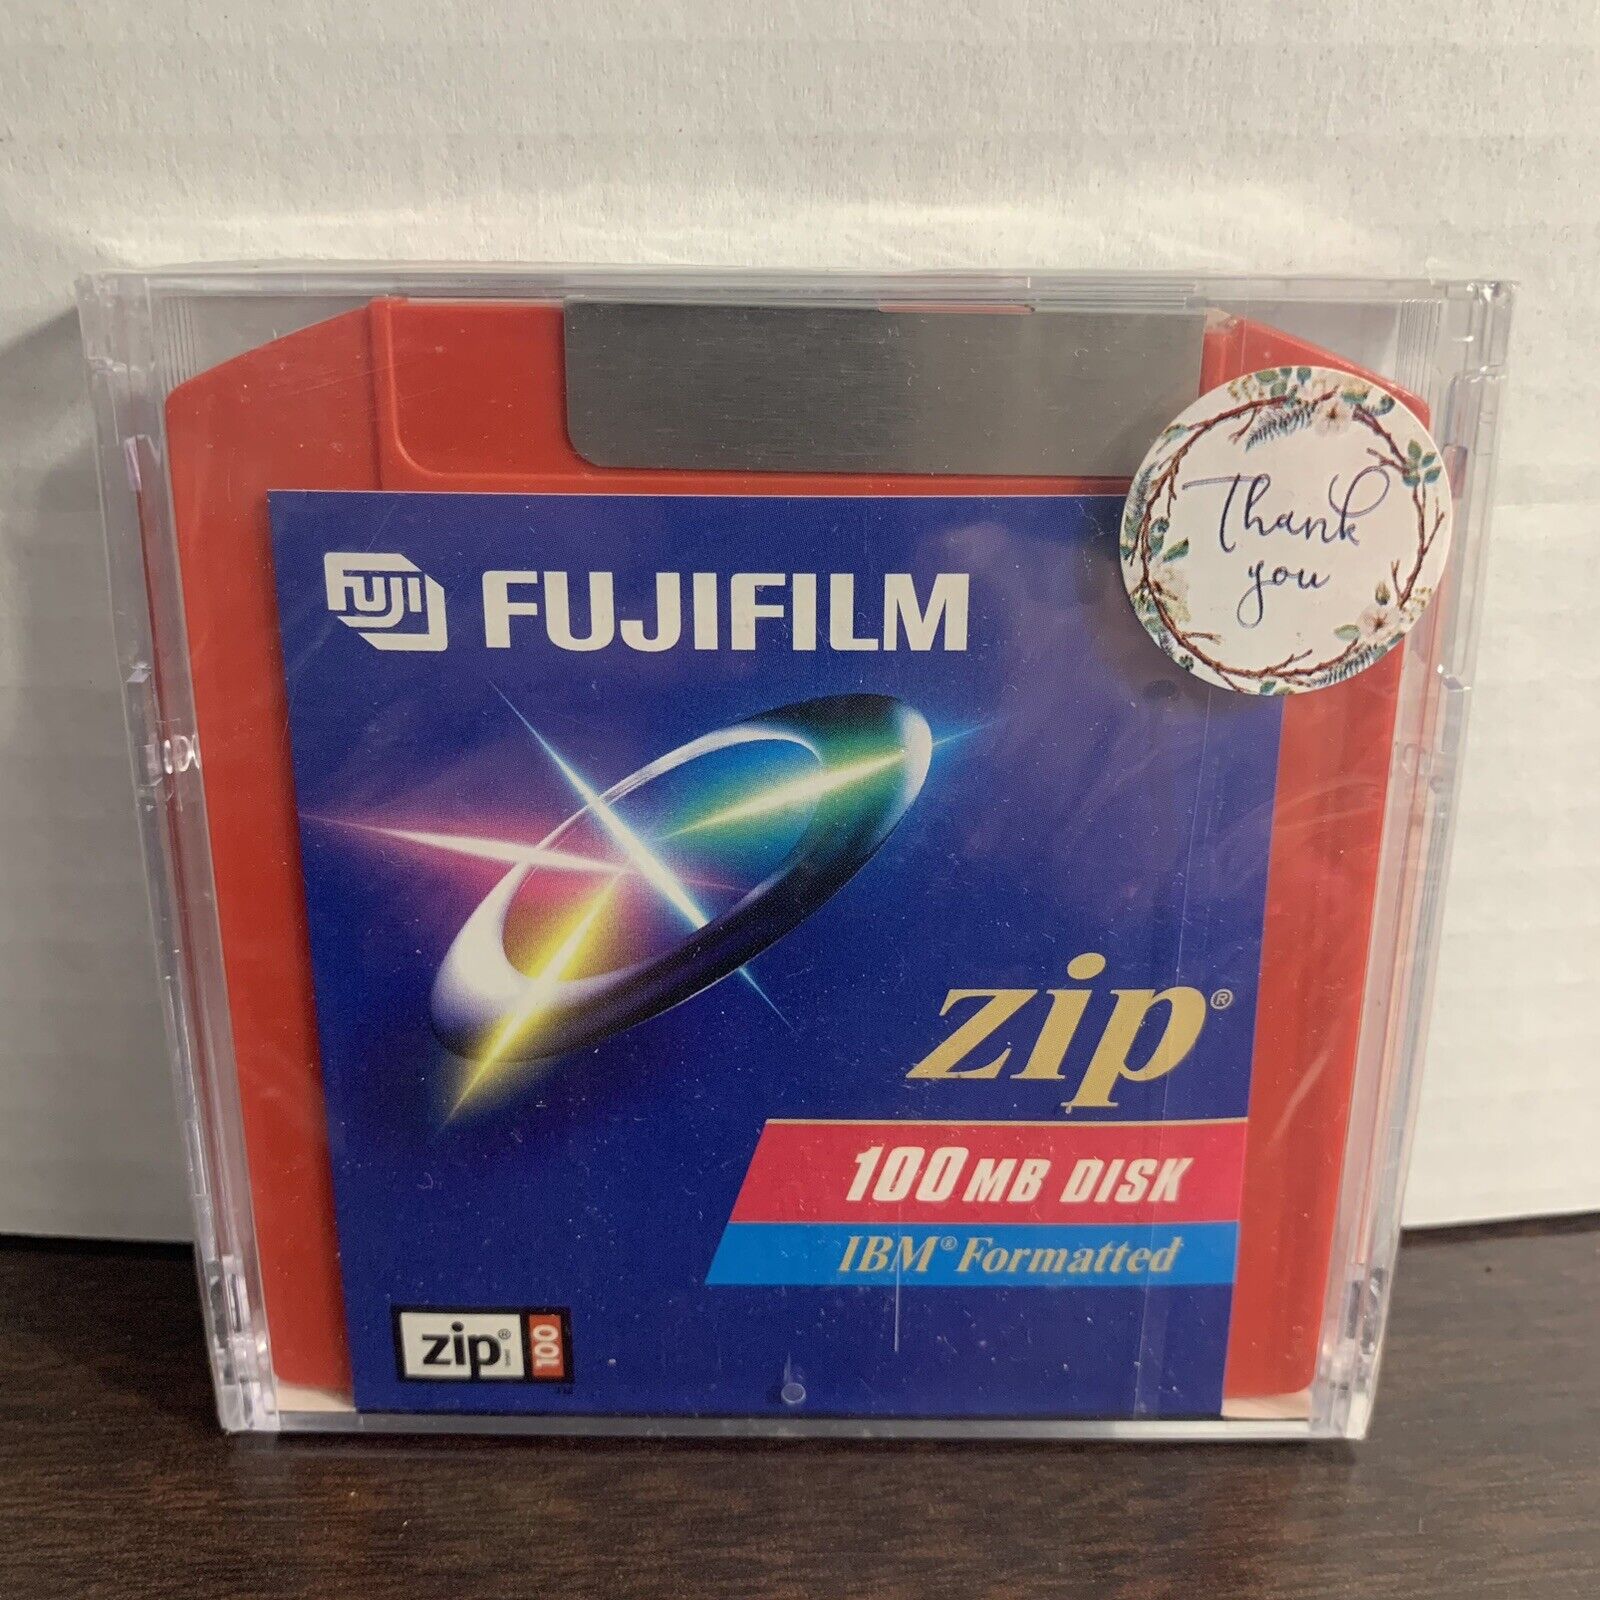 FUJI FUJIFILM 100 MB Zip Drive Disks IBM Formatted - NEW Factory Sealed Rare Old